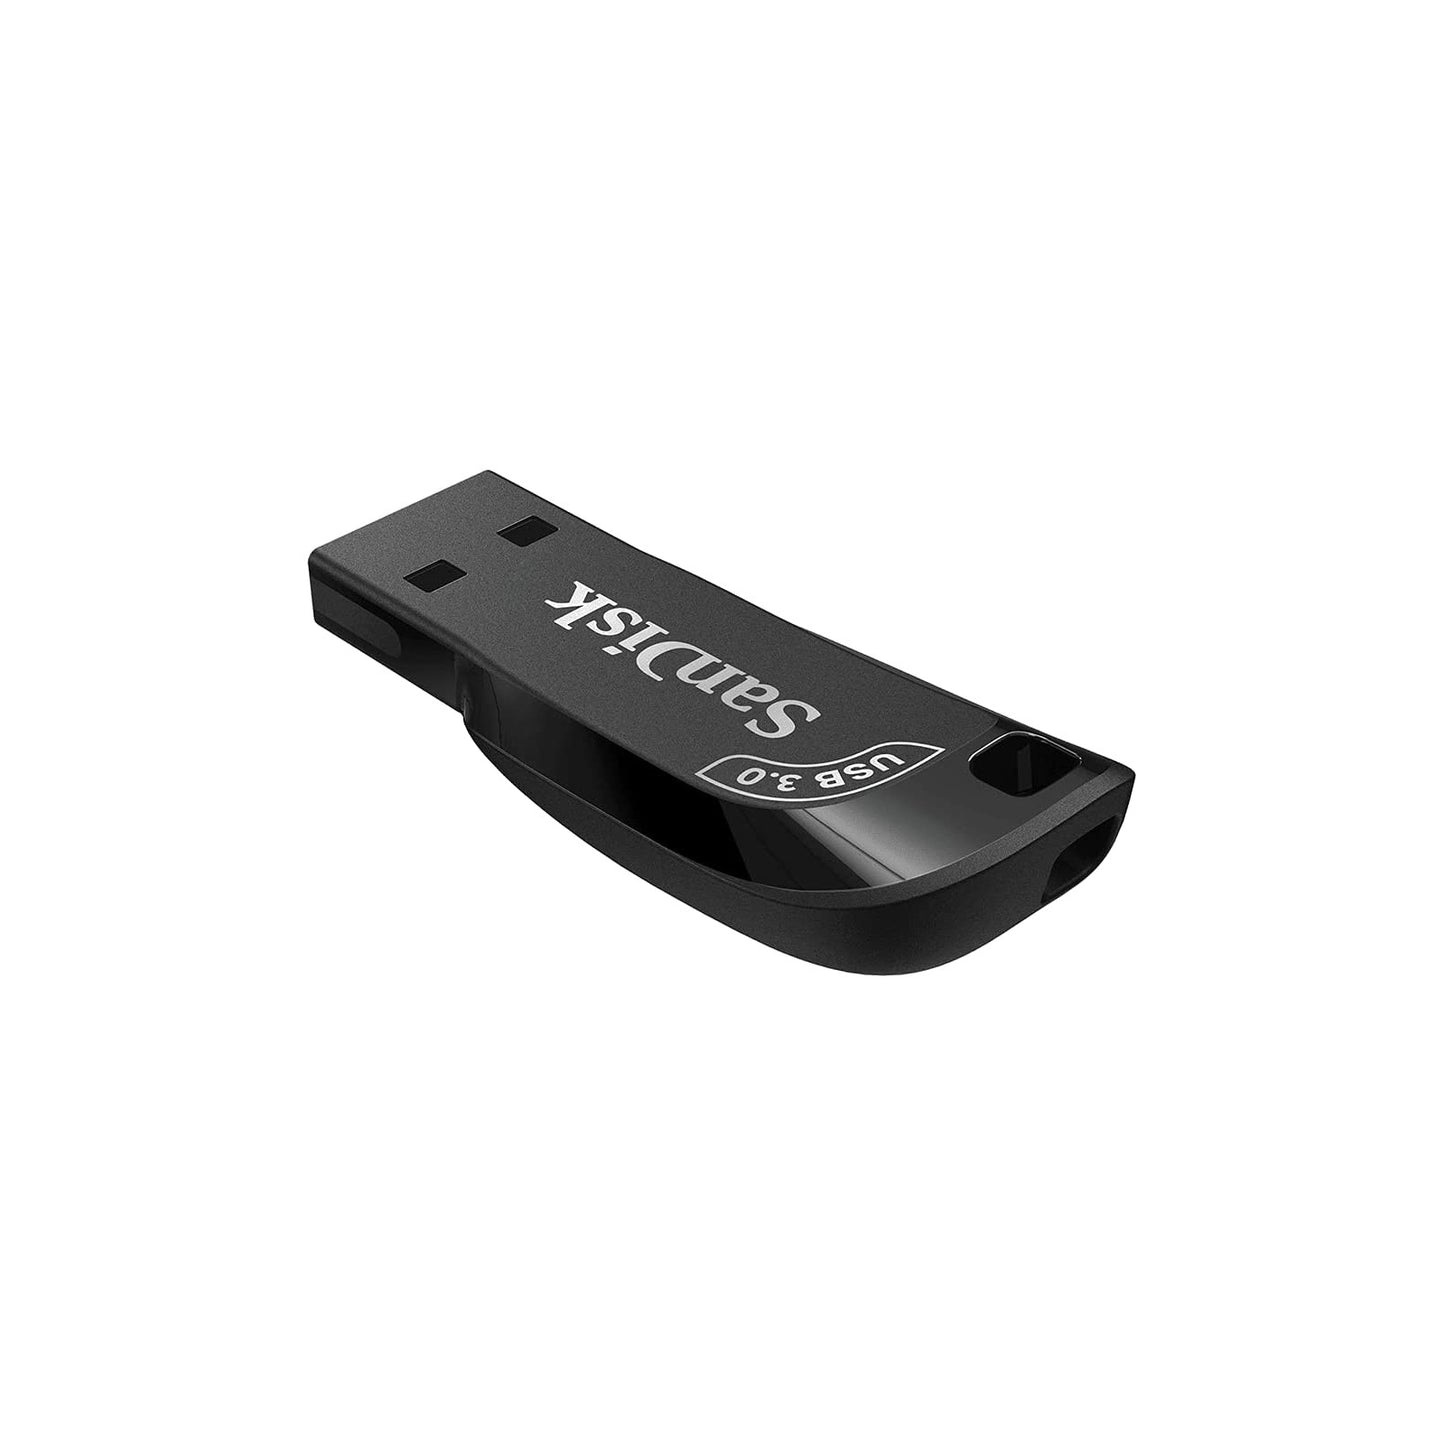 SanDisk Ultra Shift 128GB 100MB/S USB 3.0 Flash Drive Memory Stick Pen PC MAC